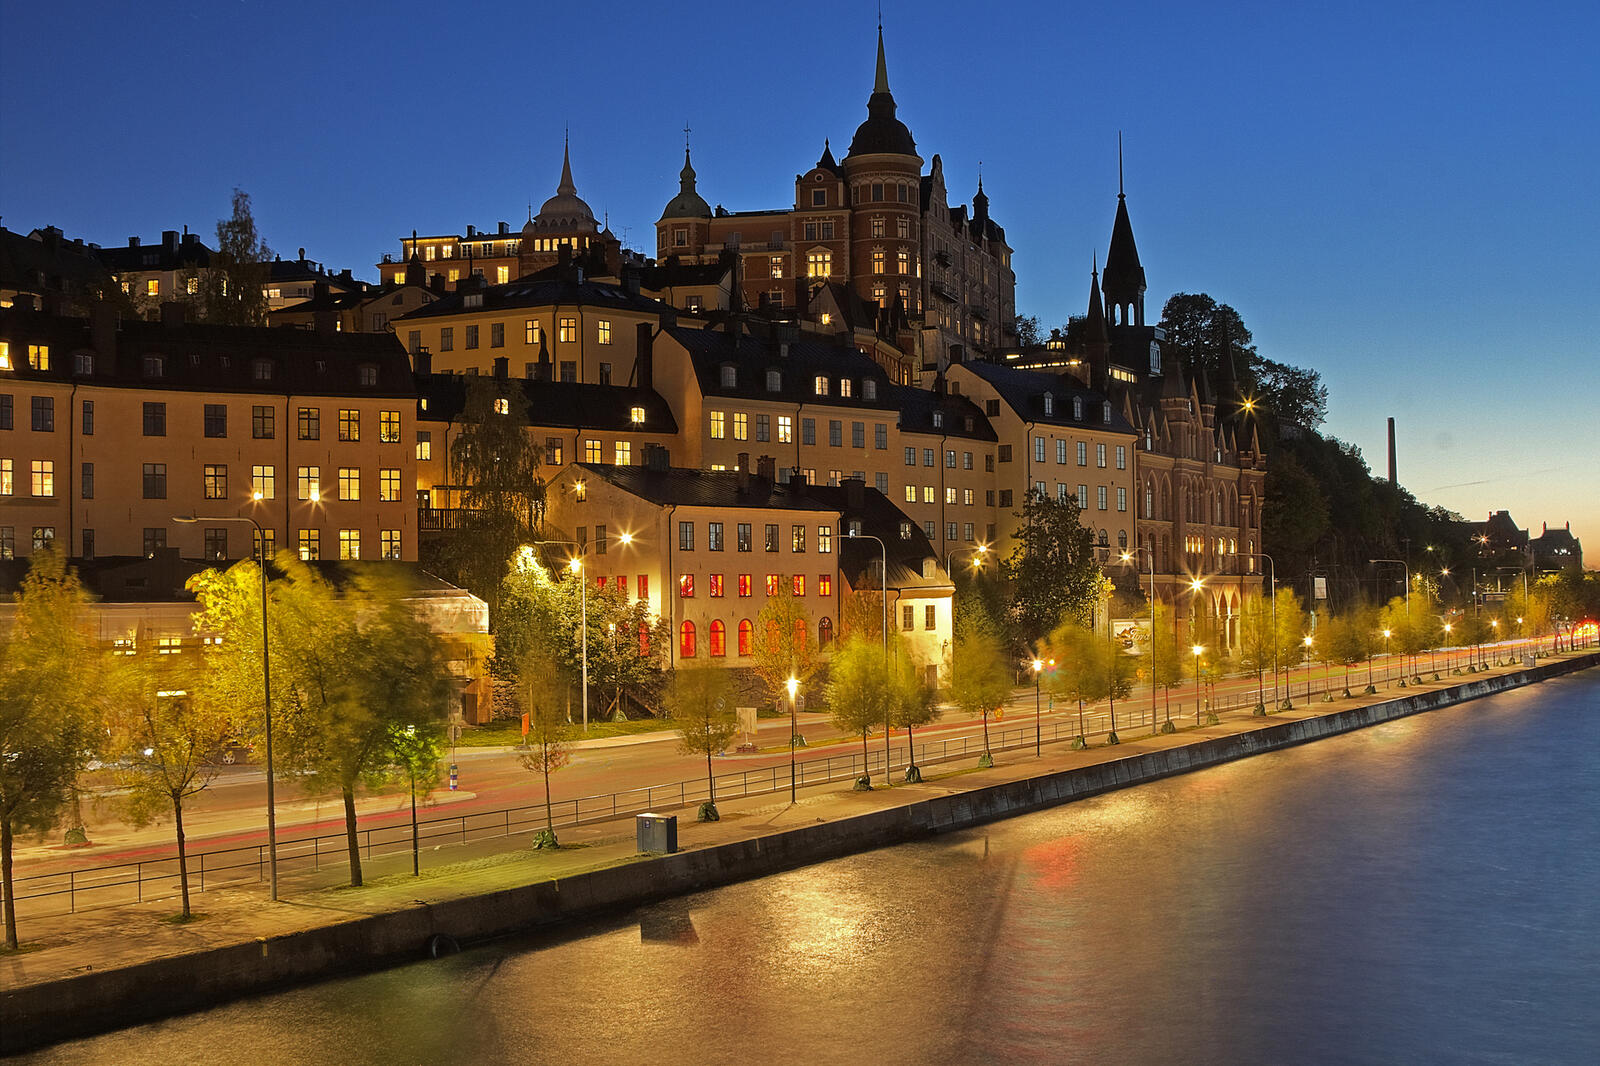 Wallpapers night city illuminated Sweden on the desktop